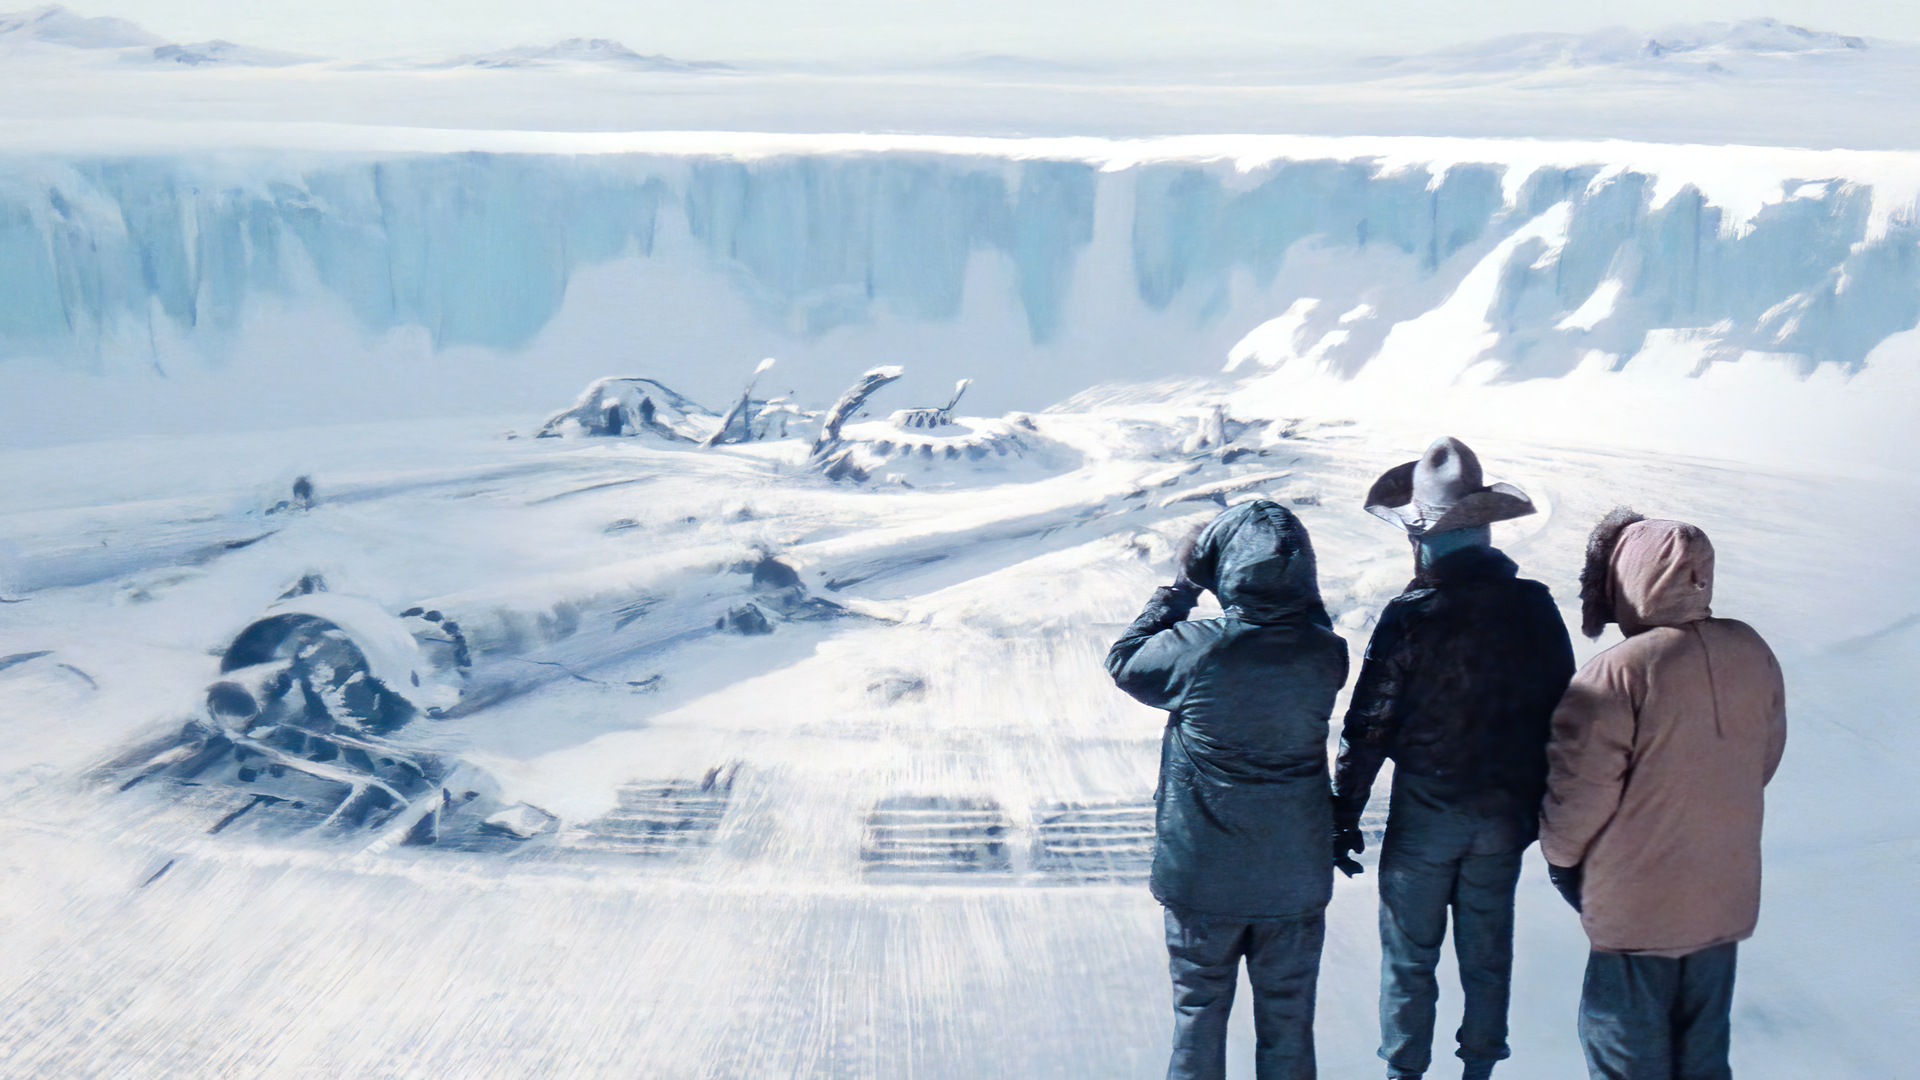 People 1920x1080 The Thing glacier spaceship movies film stills Antarctica